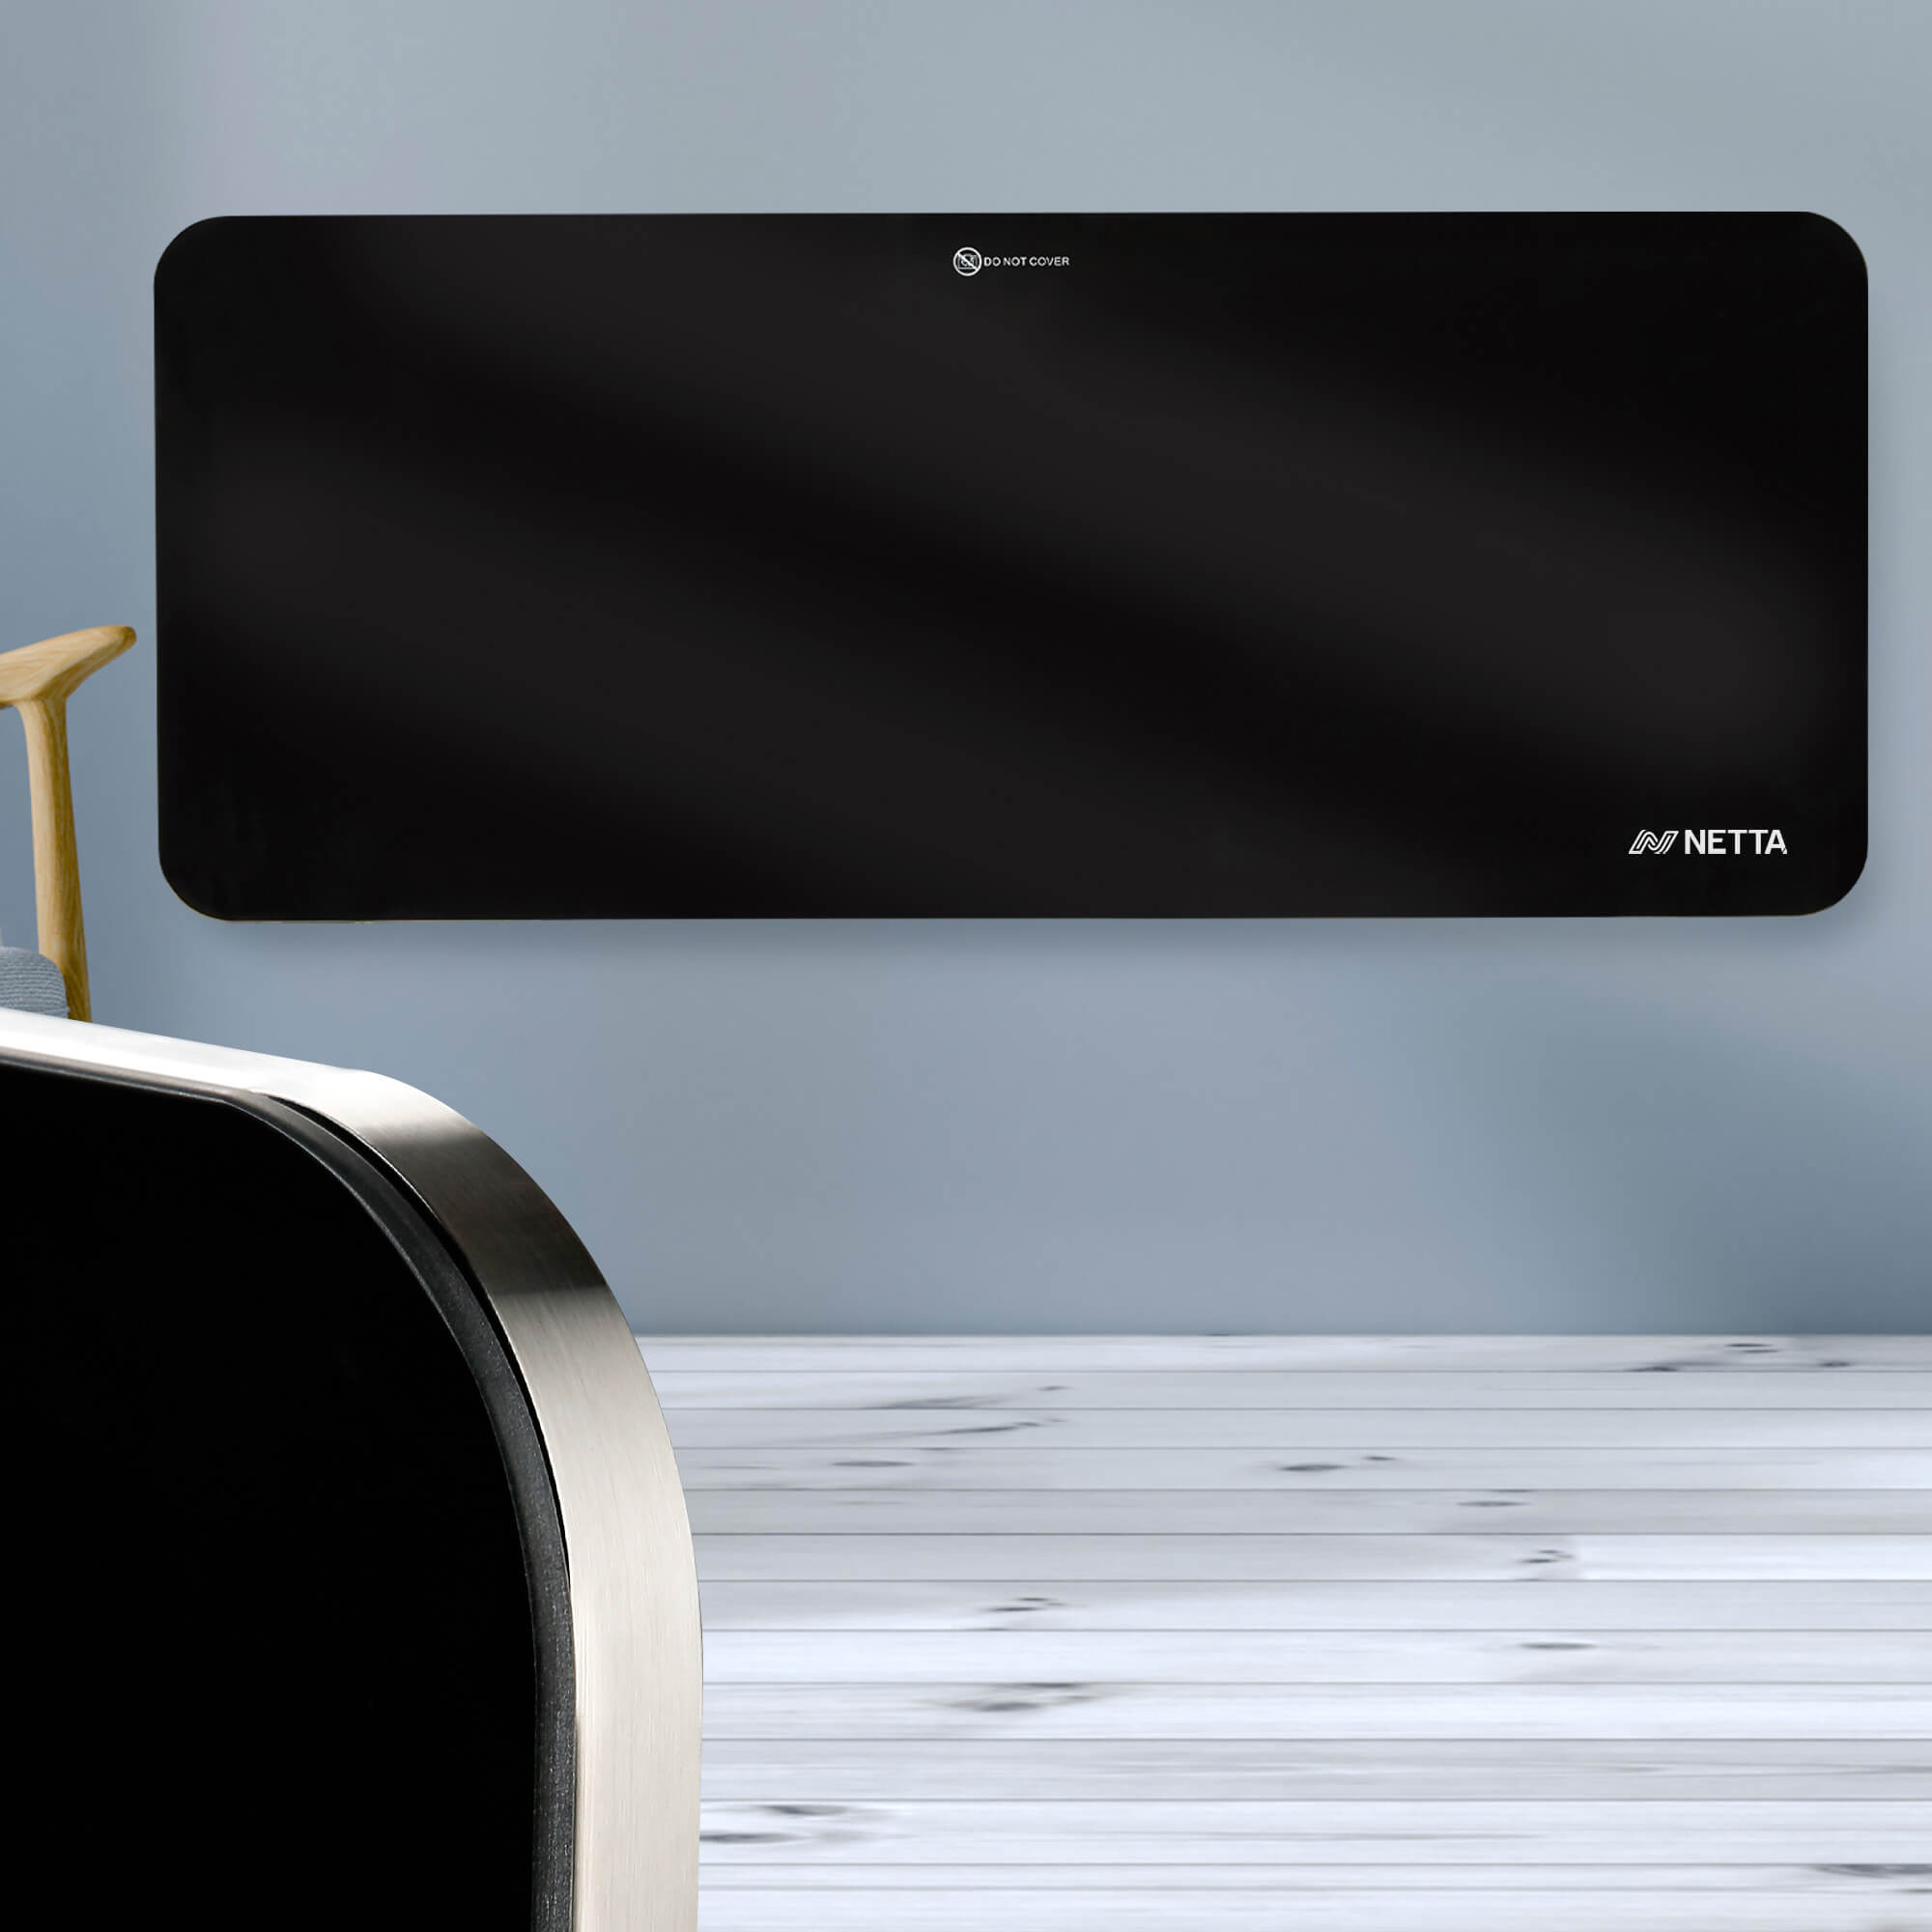 NETTA 1500W Slimline Glass Panel Heater - Black